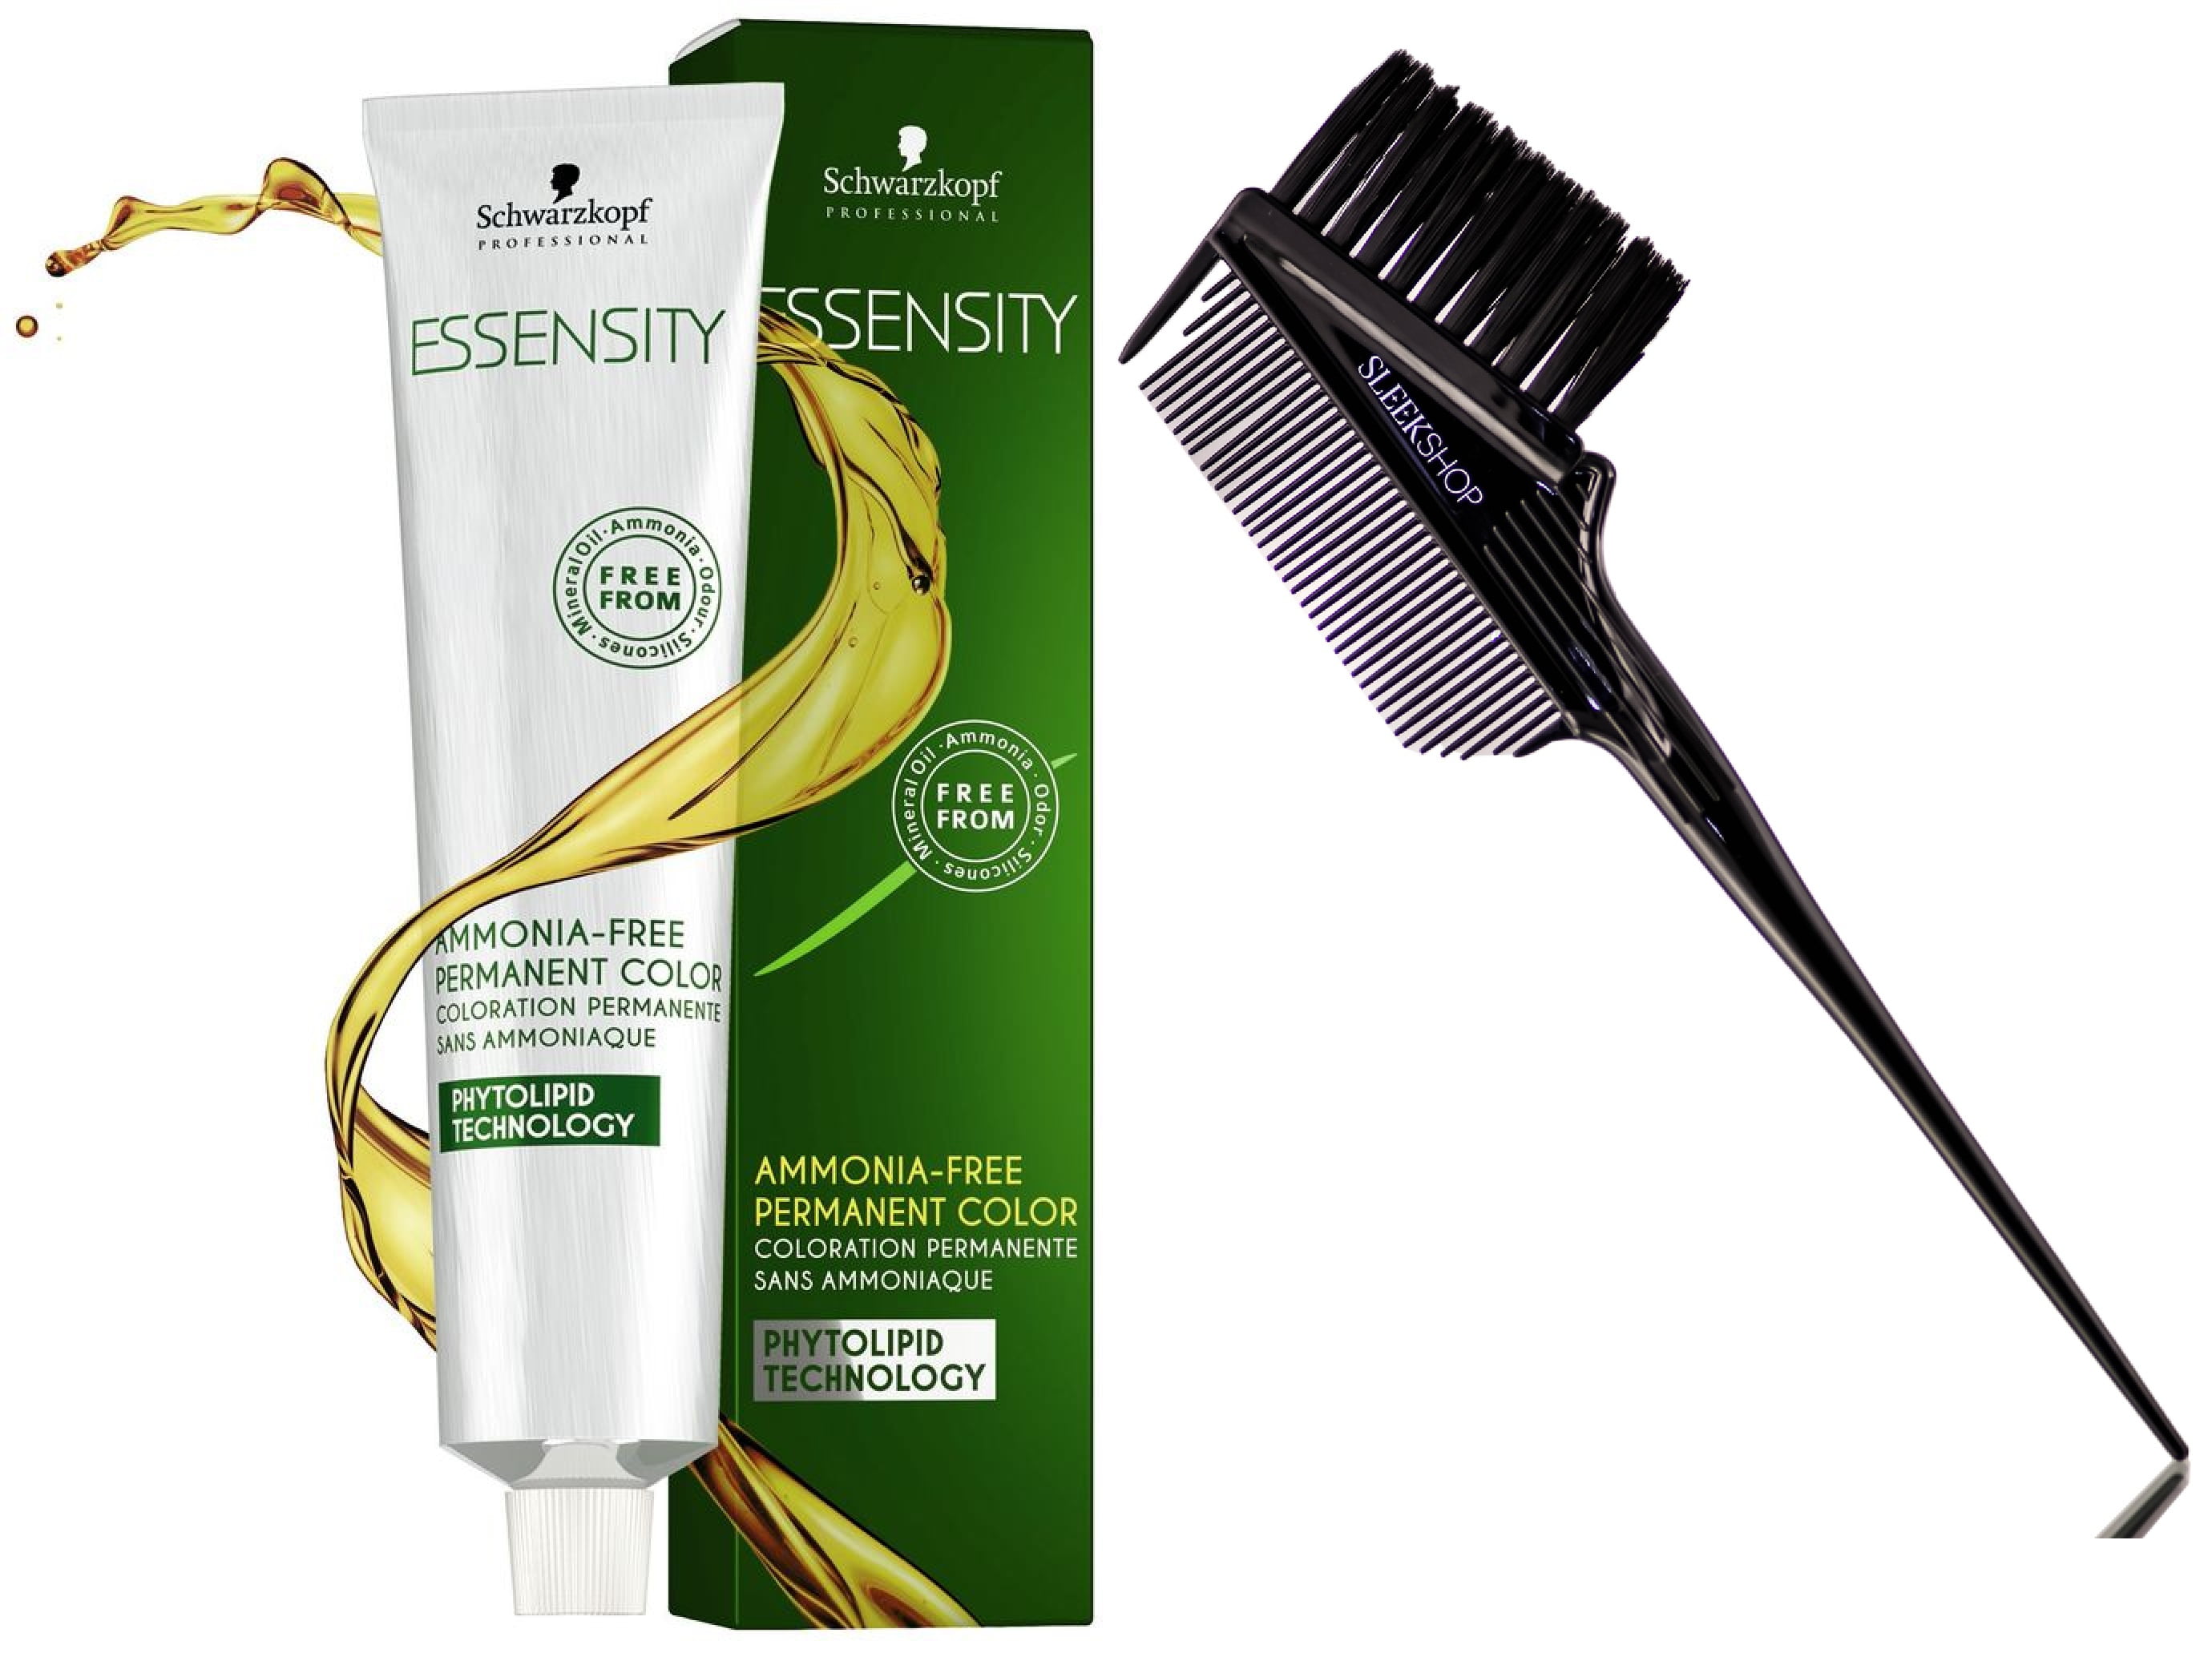 5-0 Light Brown , Schwarzkopf ESSENSITY Ammonia-Free PERMANENT HAIR COLOR  Dye Haircolor, Phytolipid Technology - Pack of 1 w/ Sleek 3-in-1 Brush Comb  